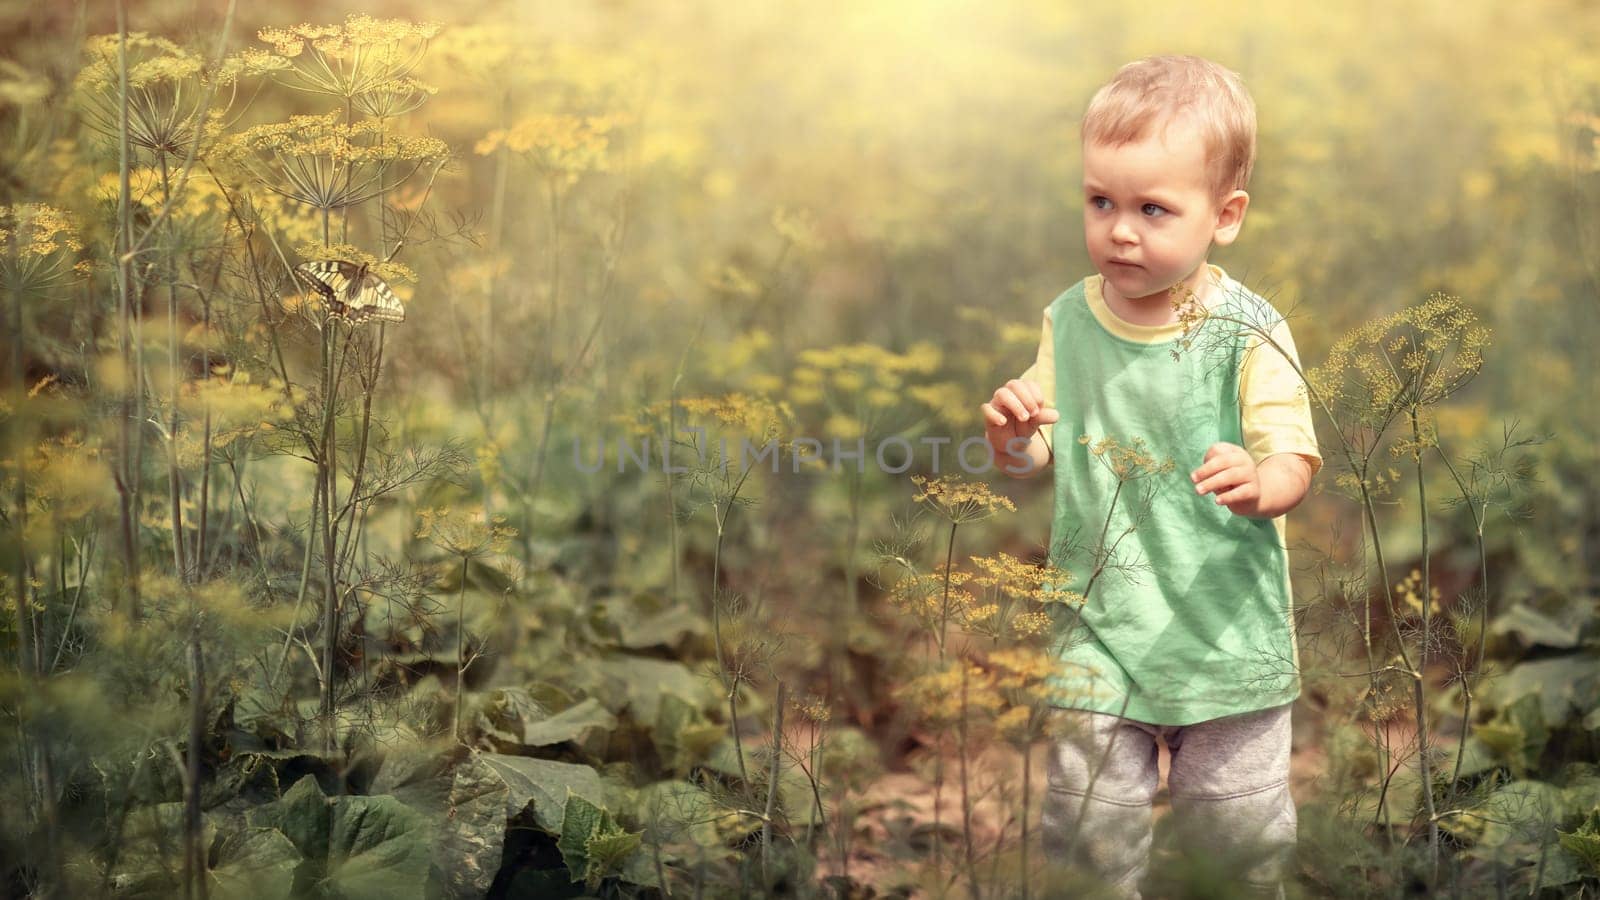 A little boy catches a butterfly amongst large garden plants